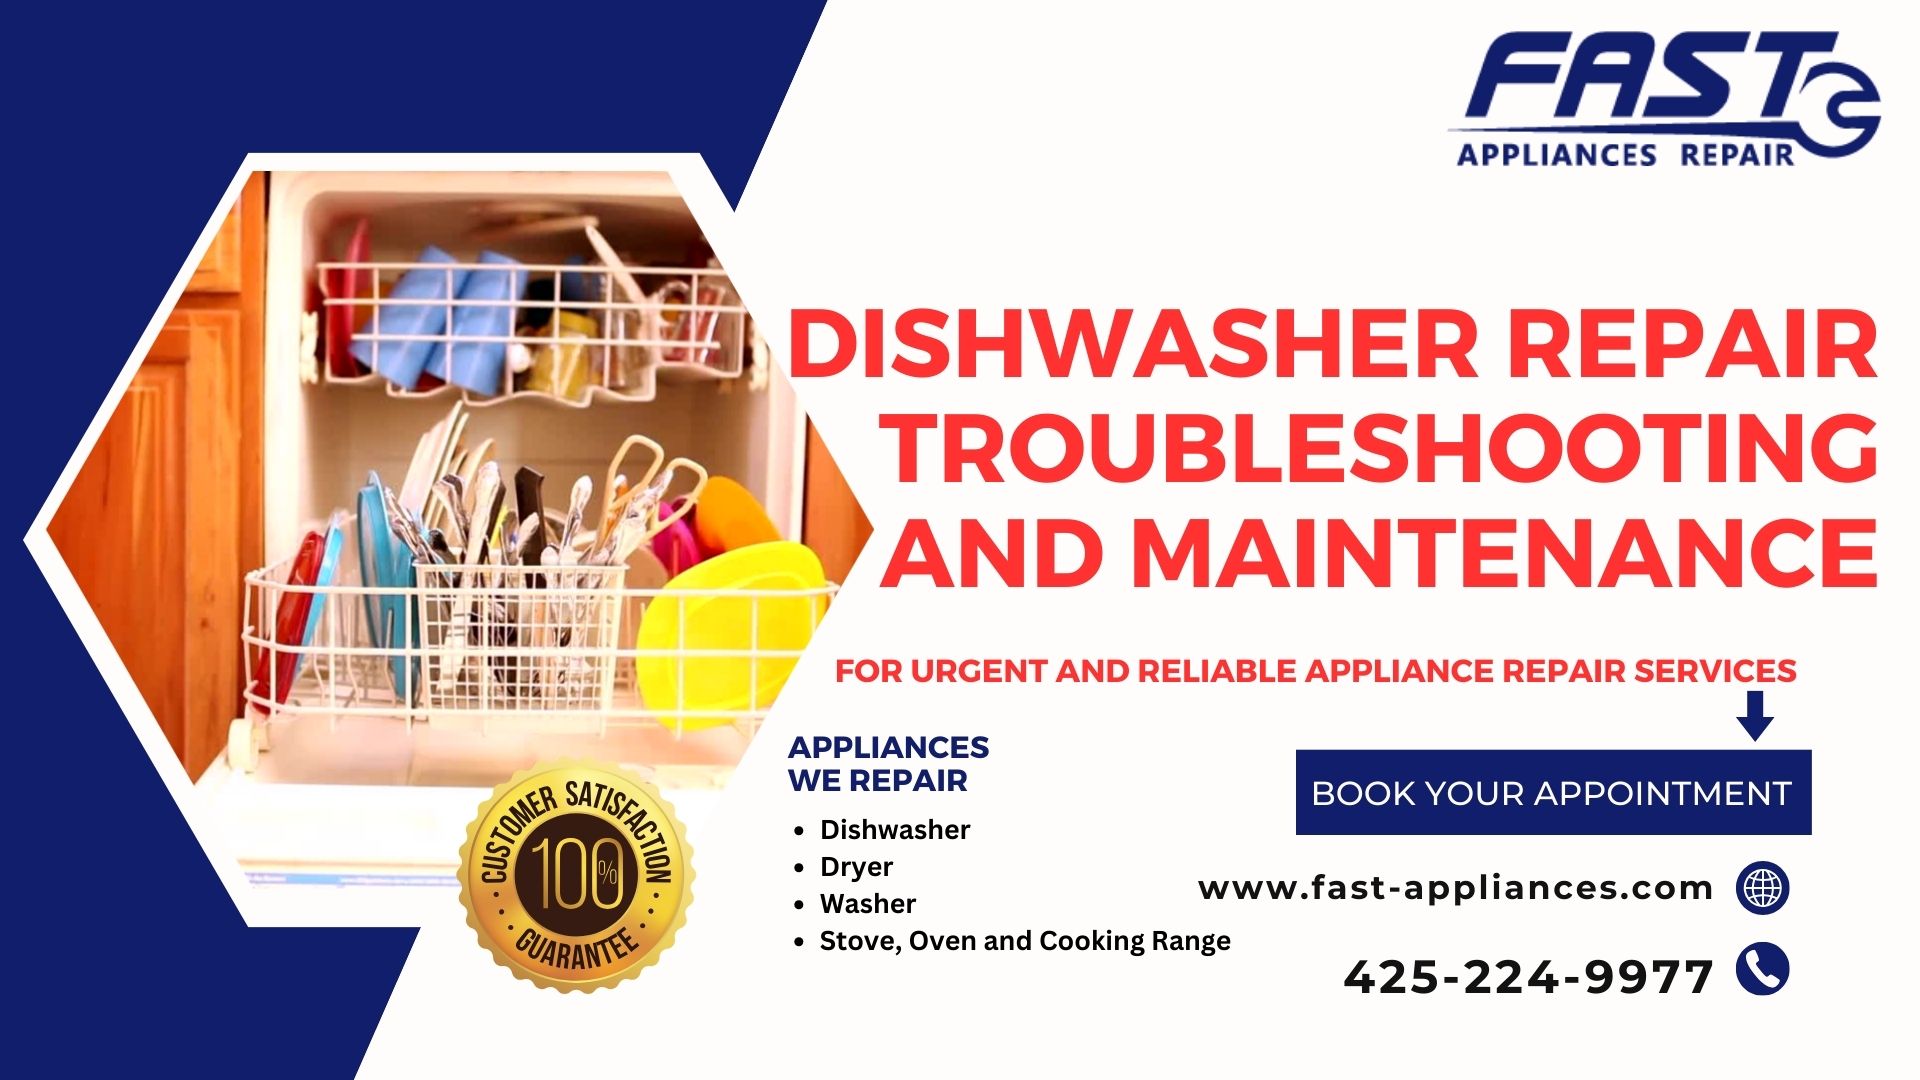 Dishwasher Repair: Troubleshooting and Maintenance